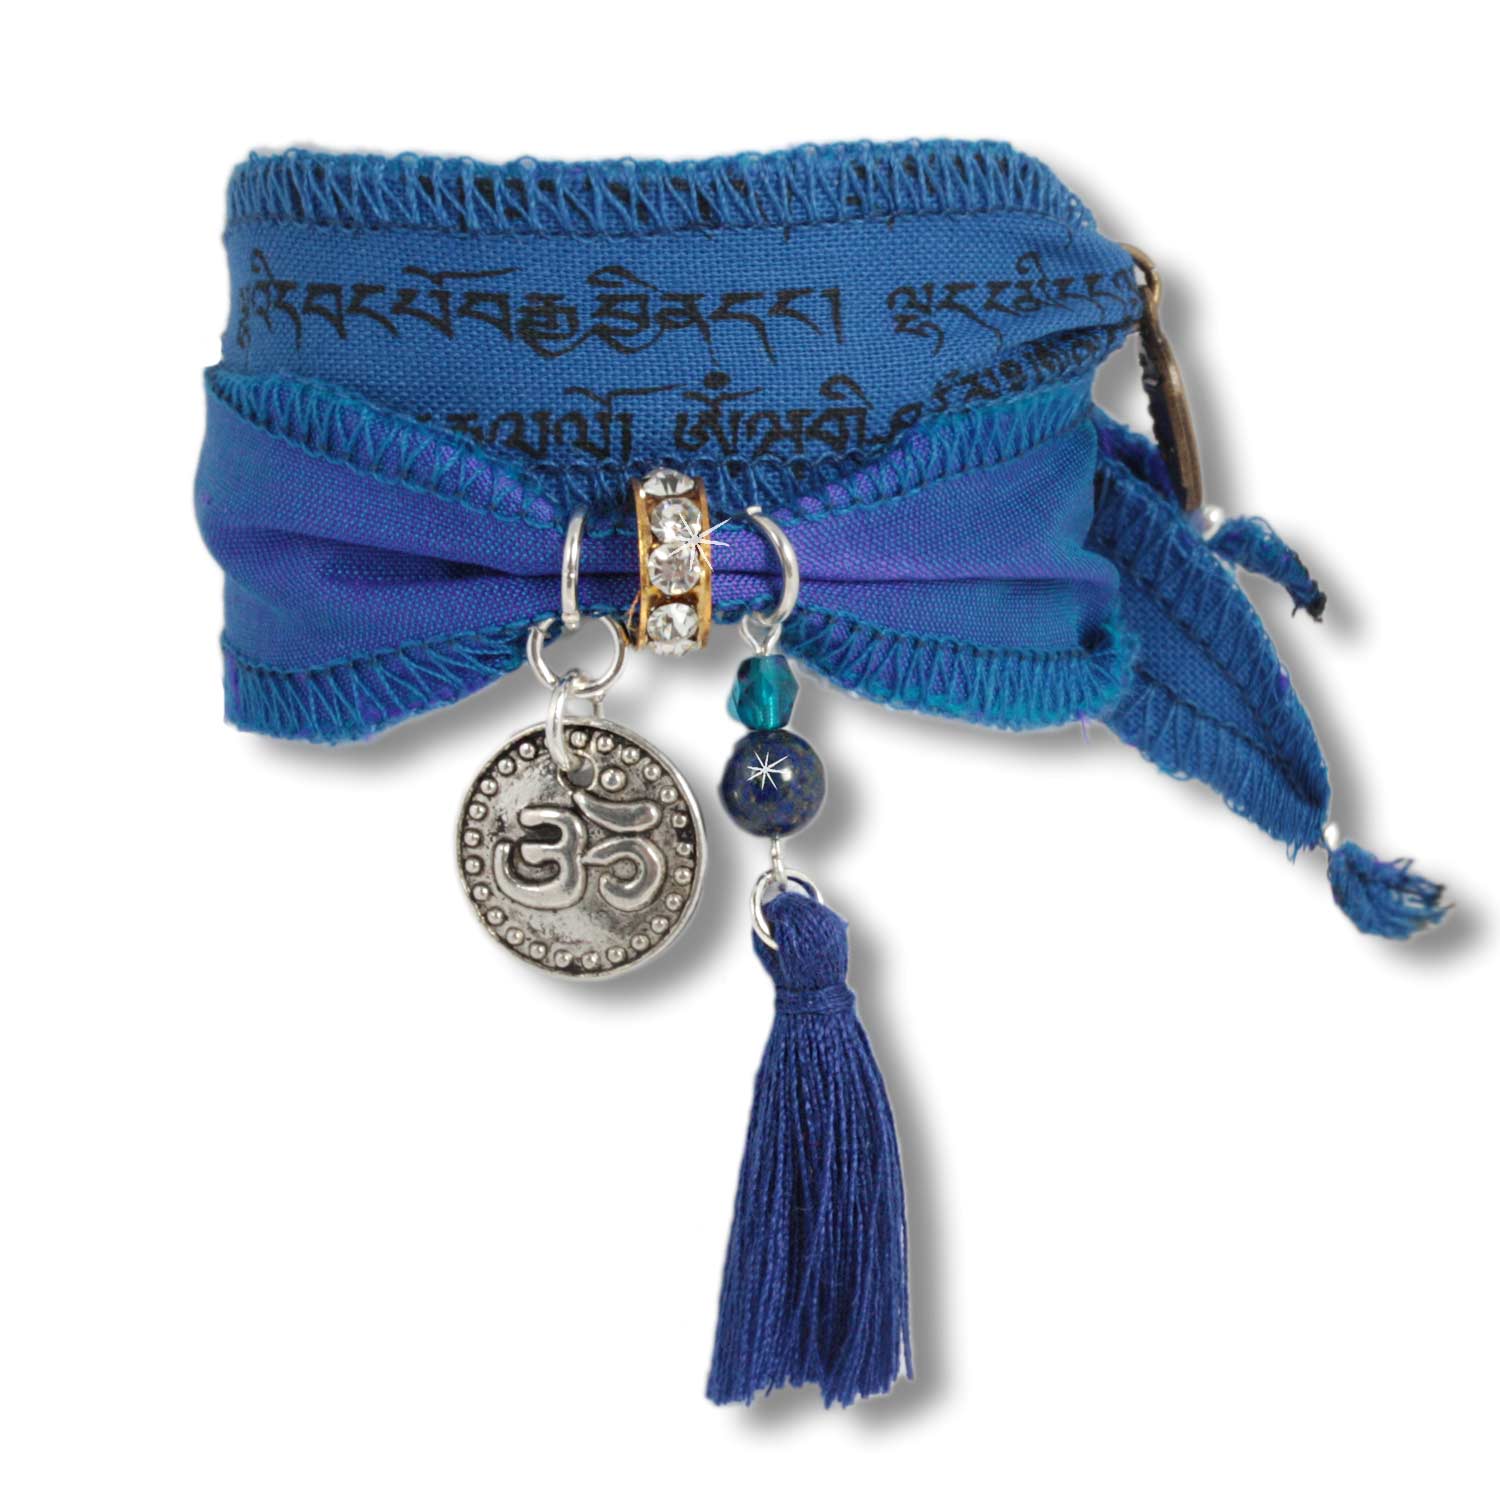 Space Norbu - Tibetan Wish bracelet made of Tibetan prayer flags with lapis lazuli